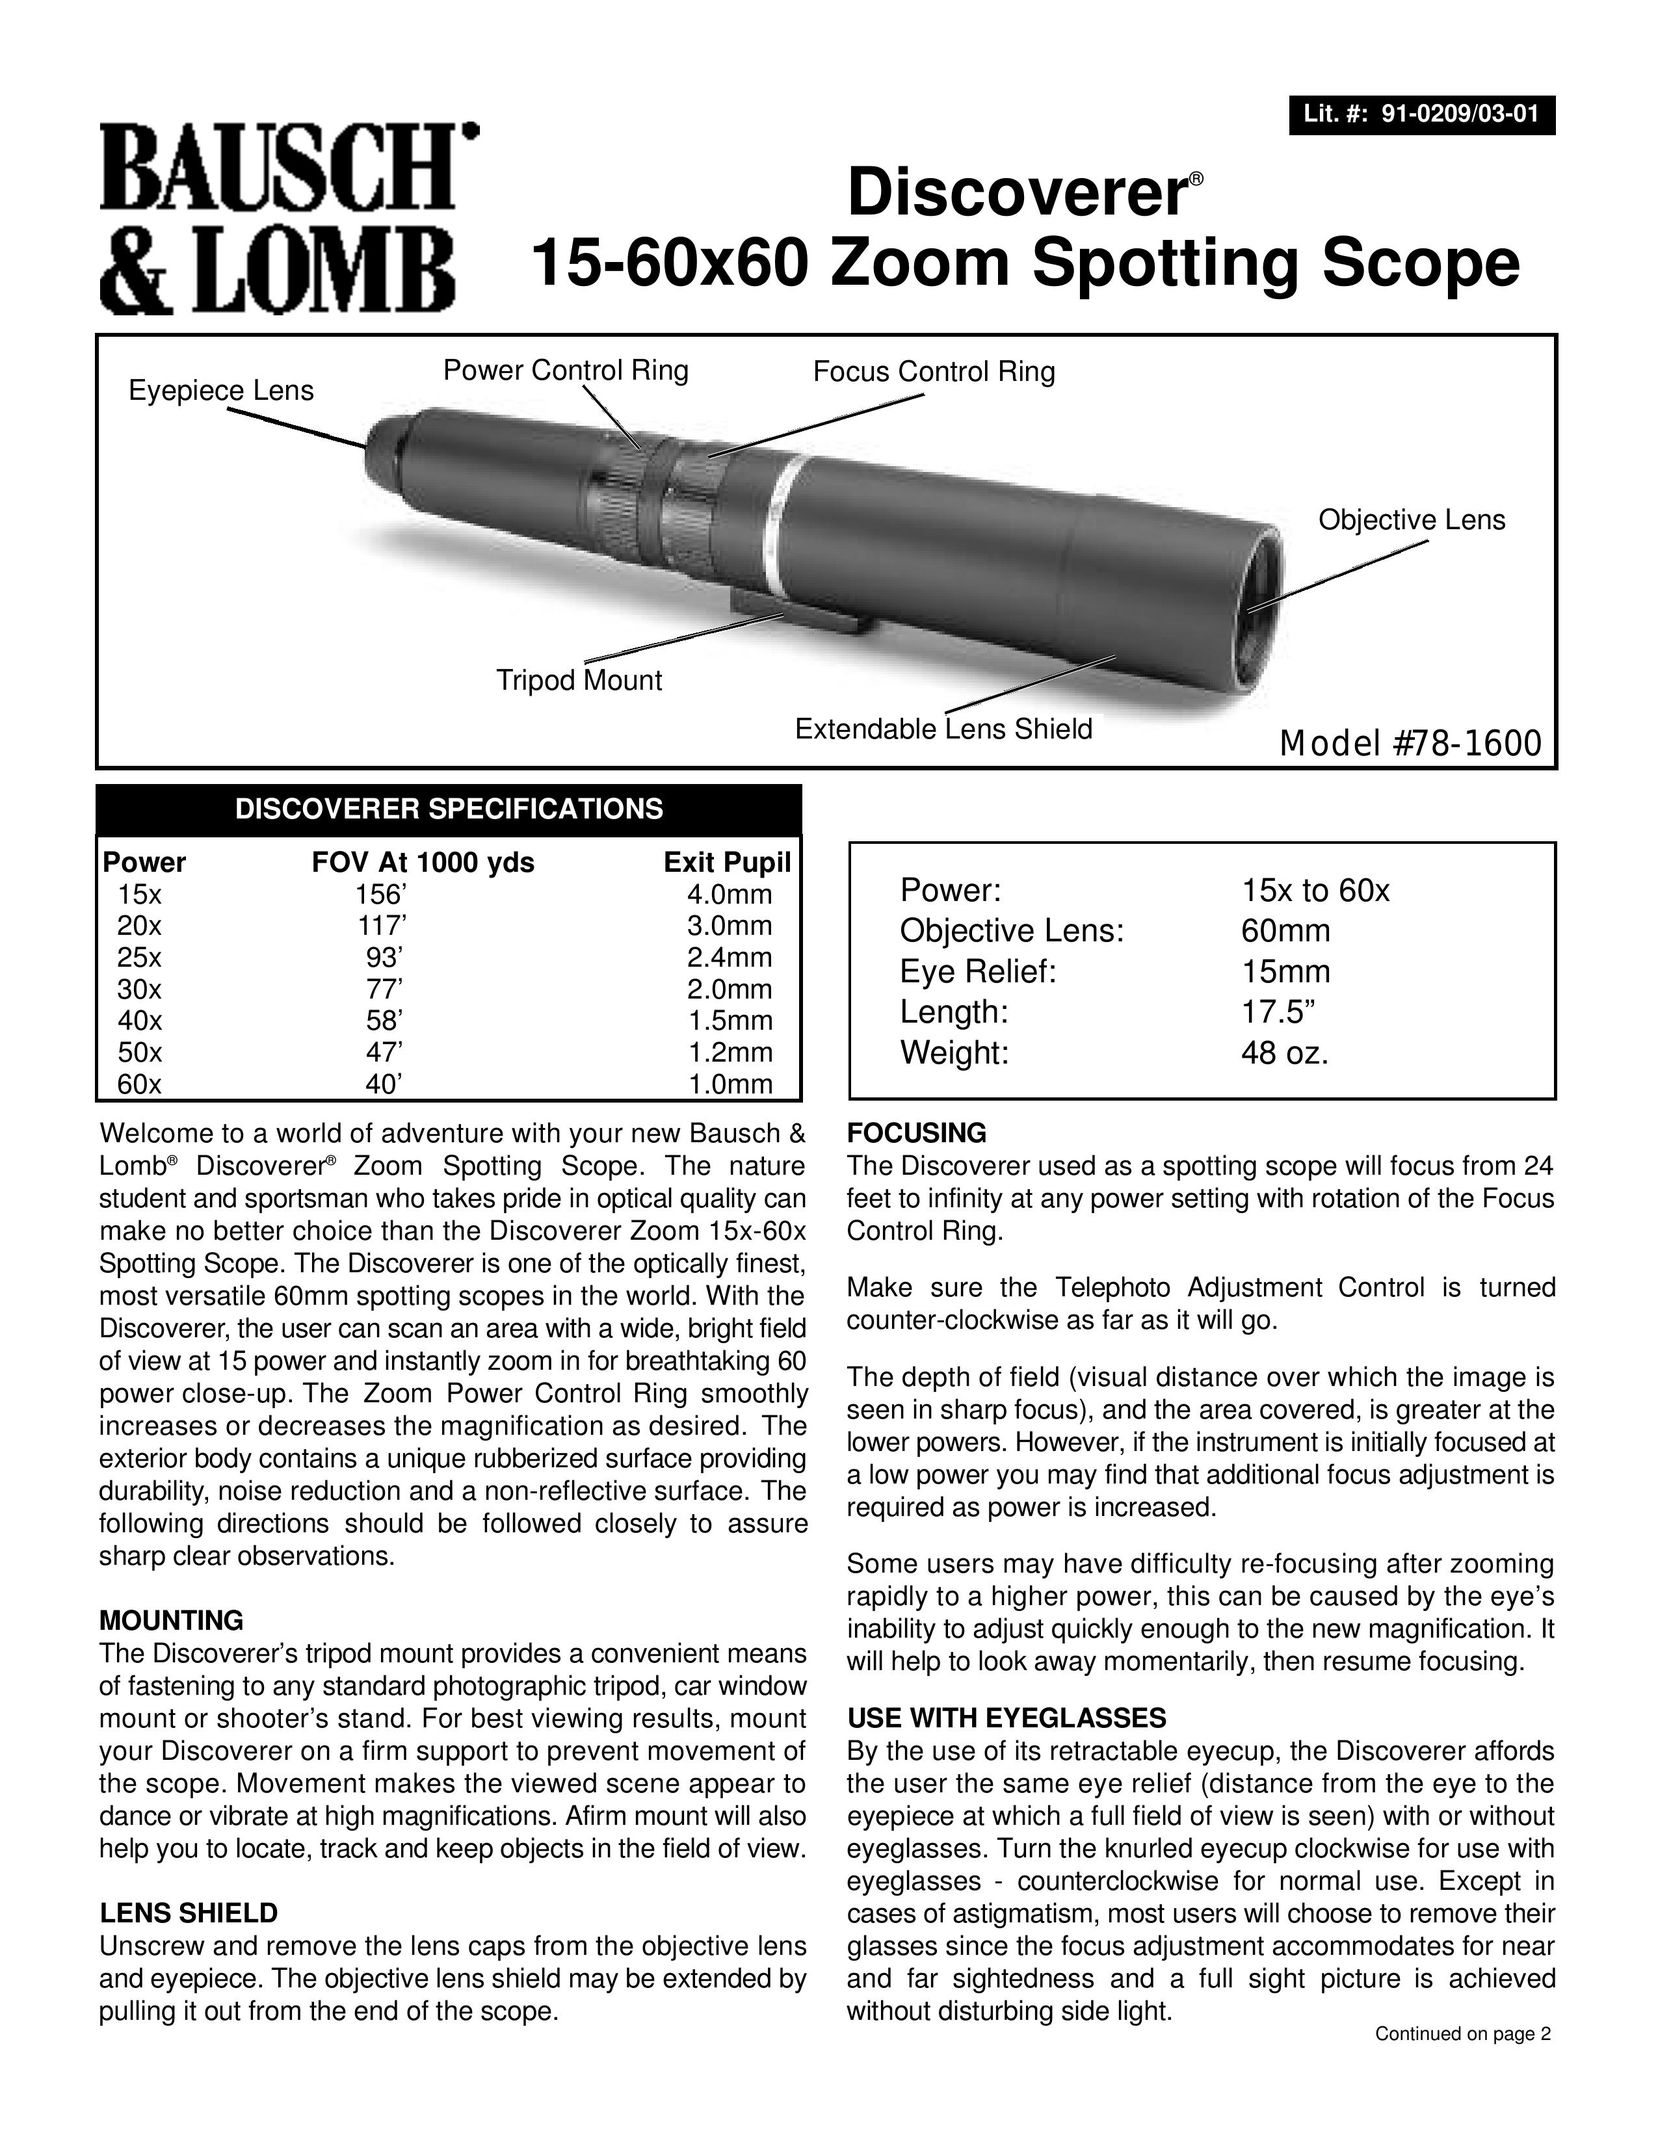 Bausch & Lomb 78-1600 Sander User Manual